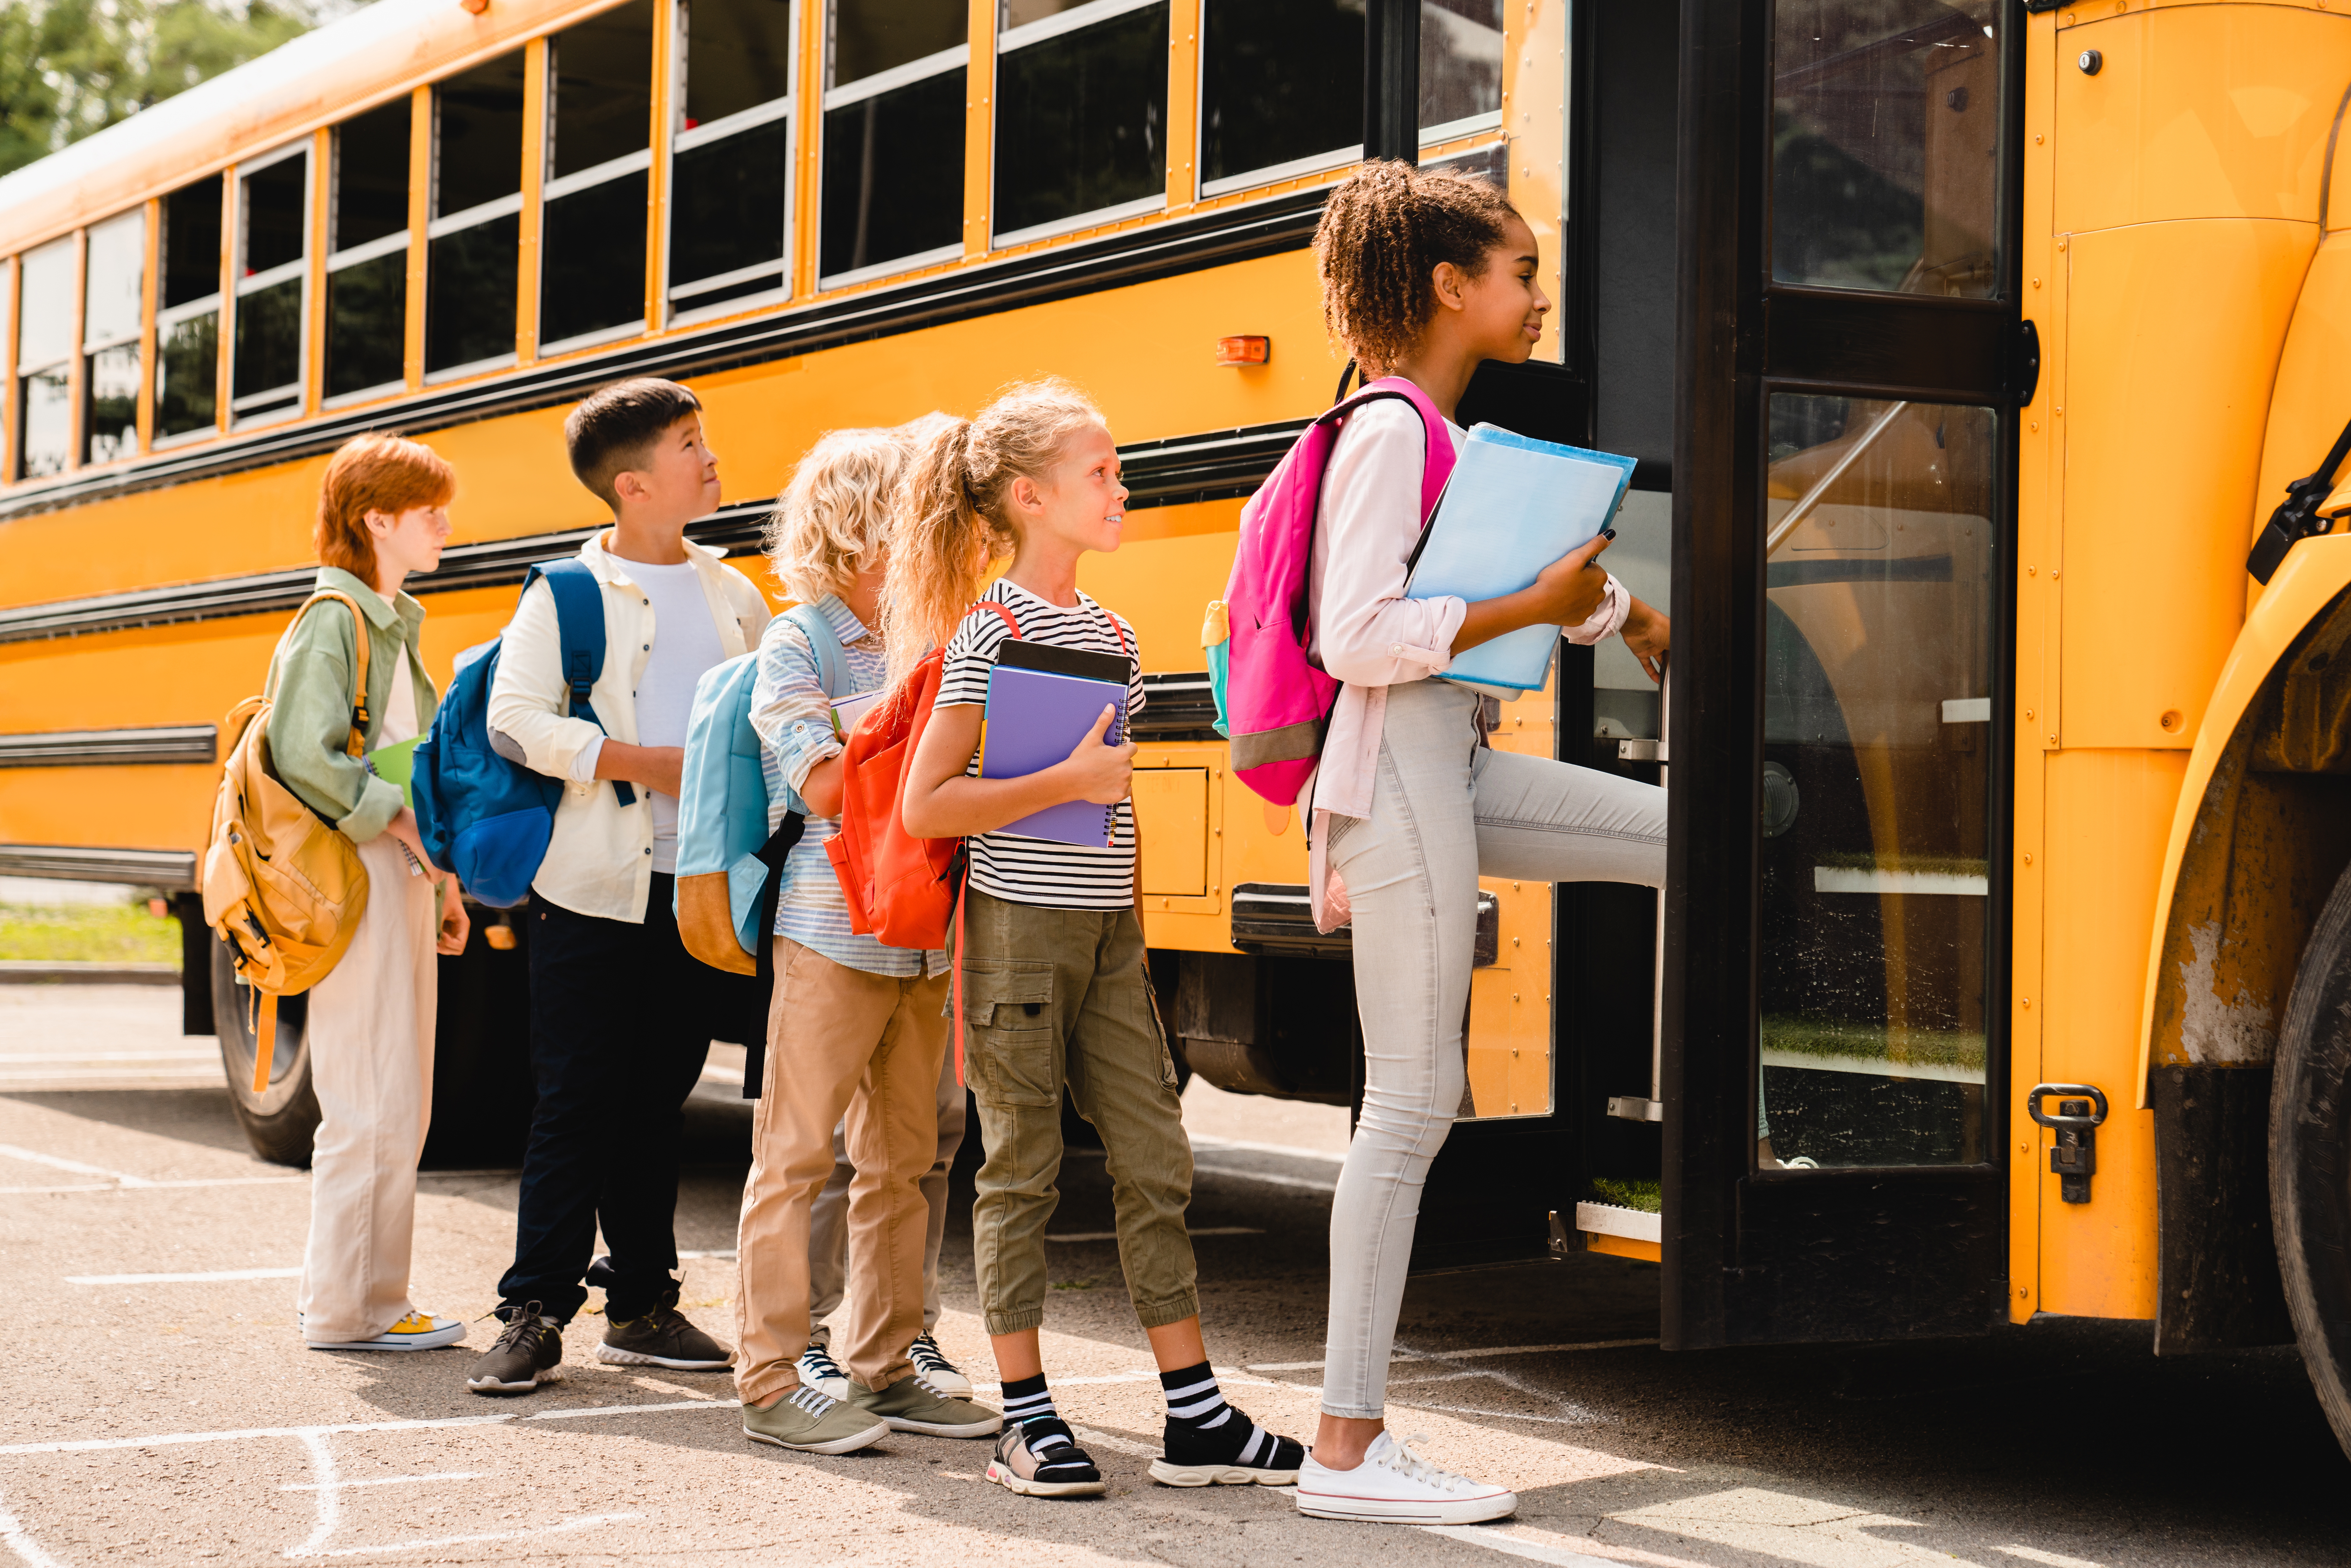 Children getting on a school bus | Source: Shutterstock